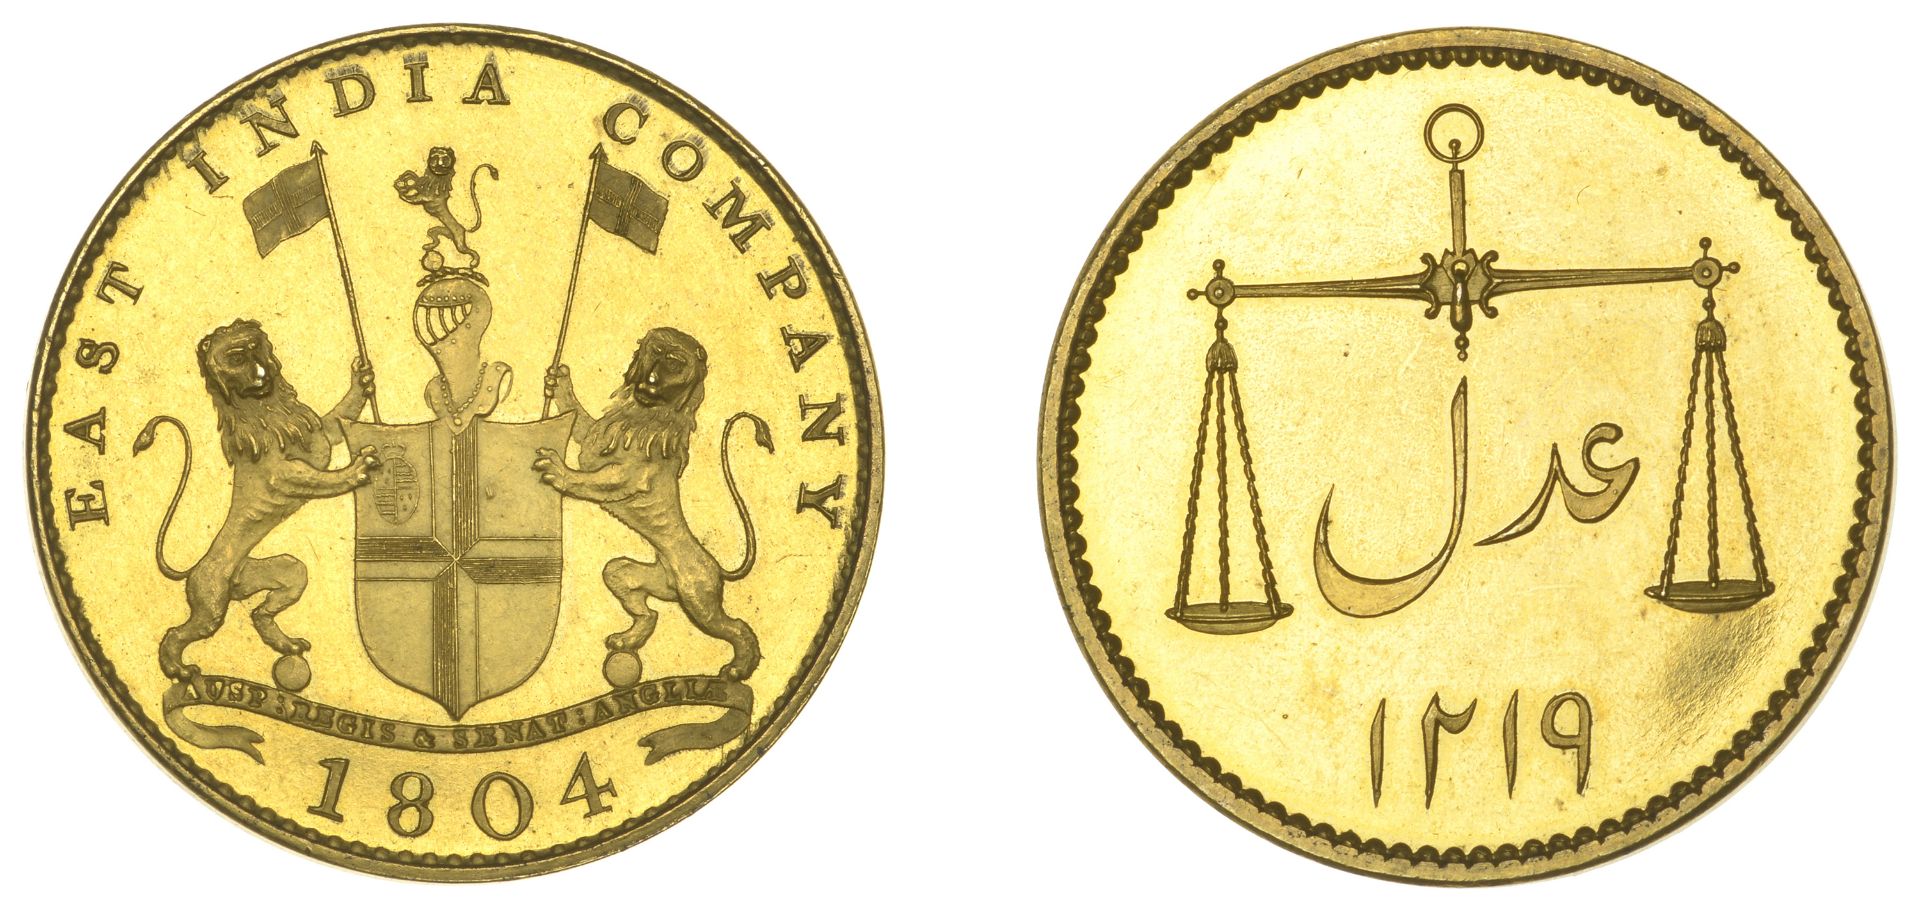 East India Company, Bombay Presidency, European minting, 1804 Soho, gilt-copper Proof Pice,...